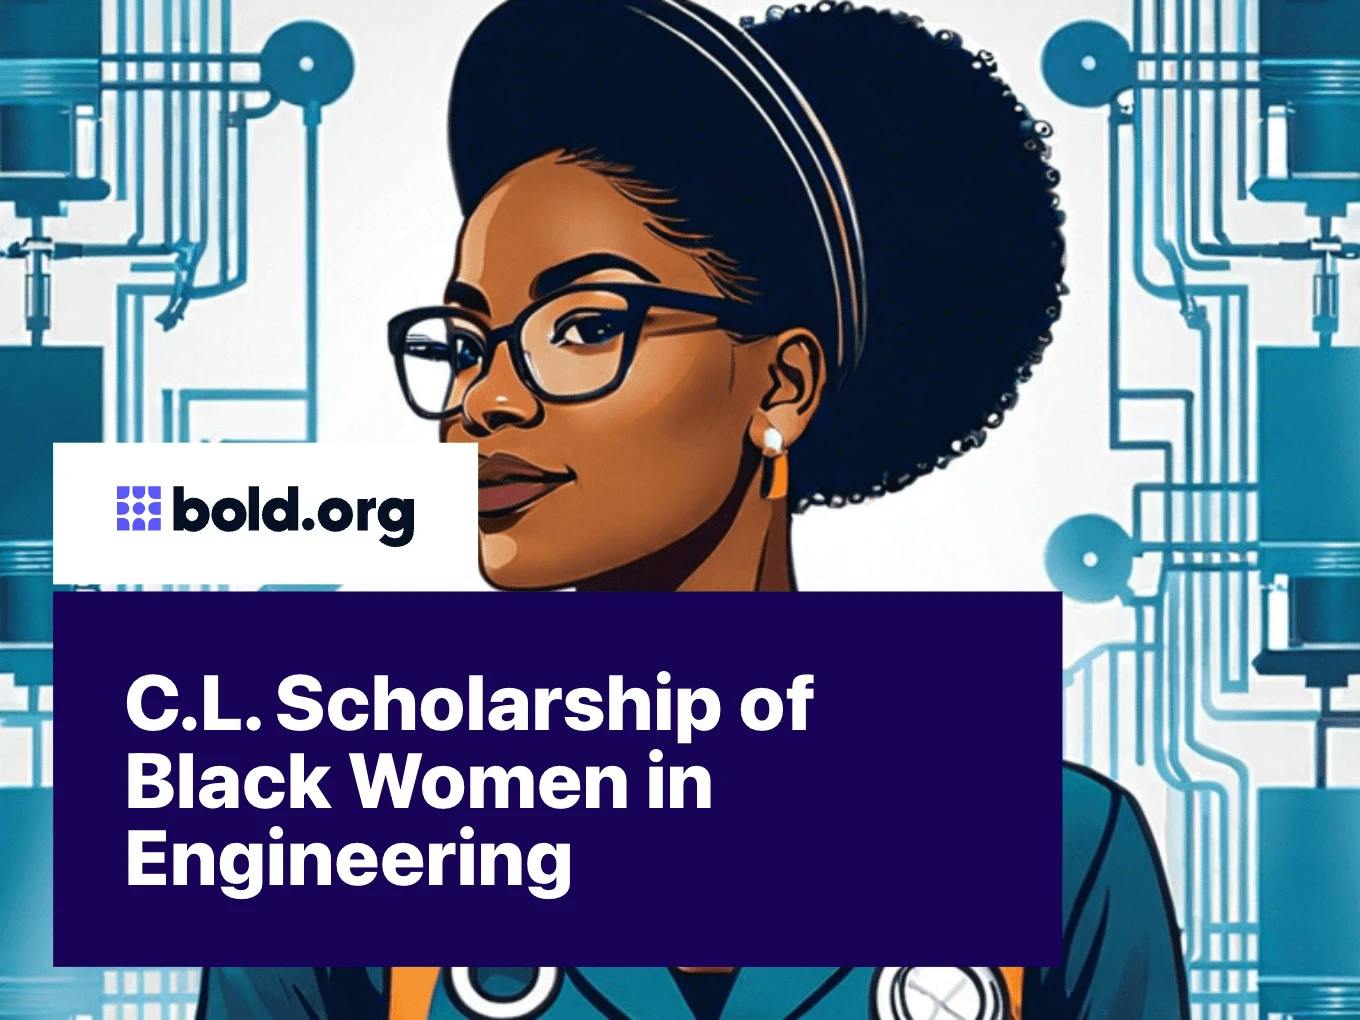 C.L. Scholarship of Black Women in Engineering